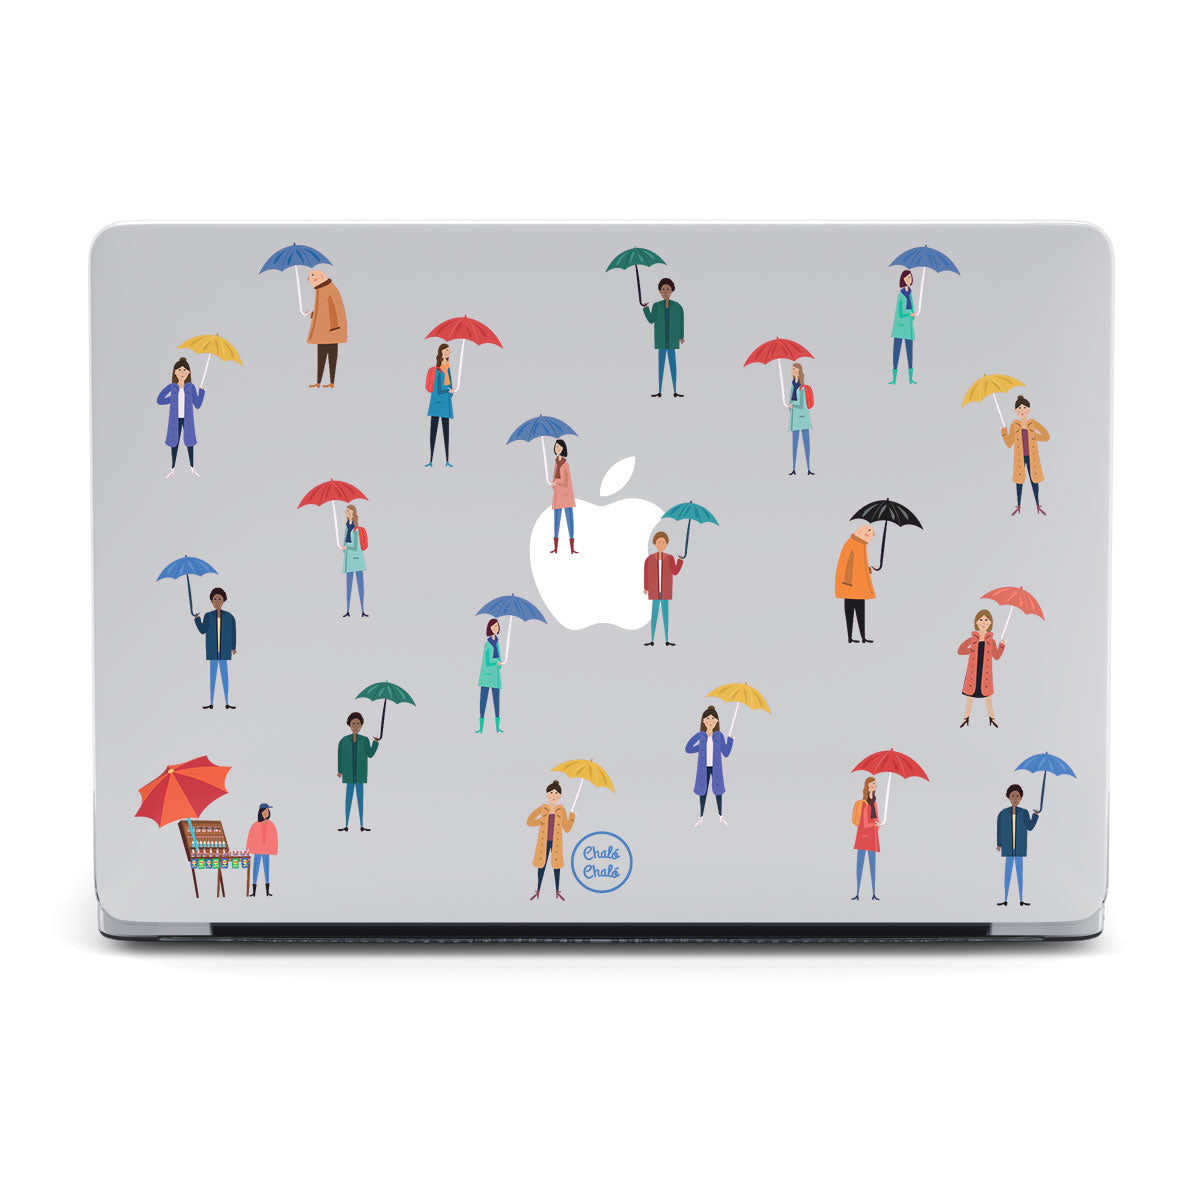 Hard Case para Macbook - Sombrillas - Chaló Chaló